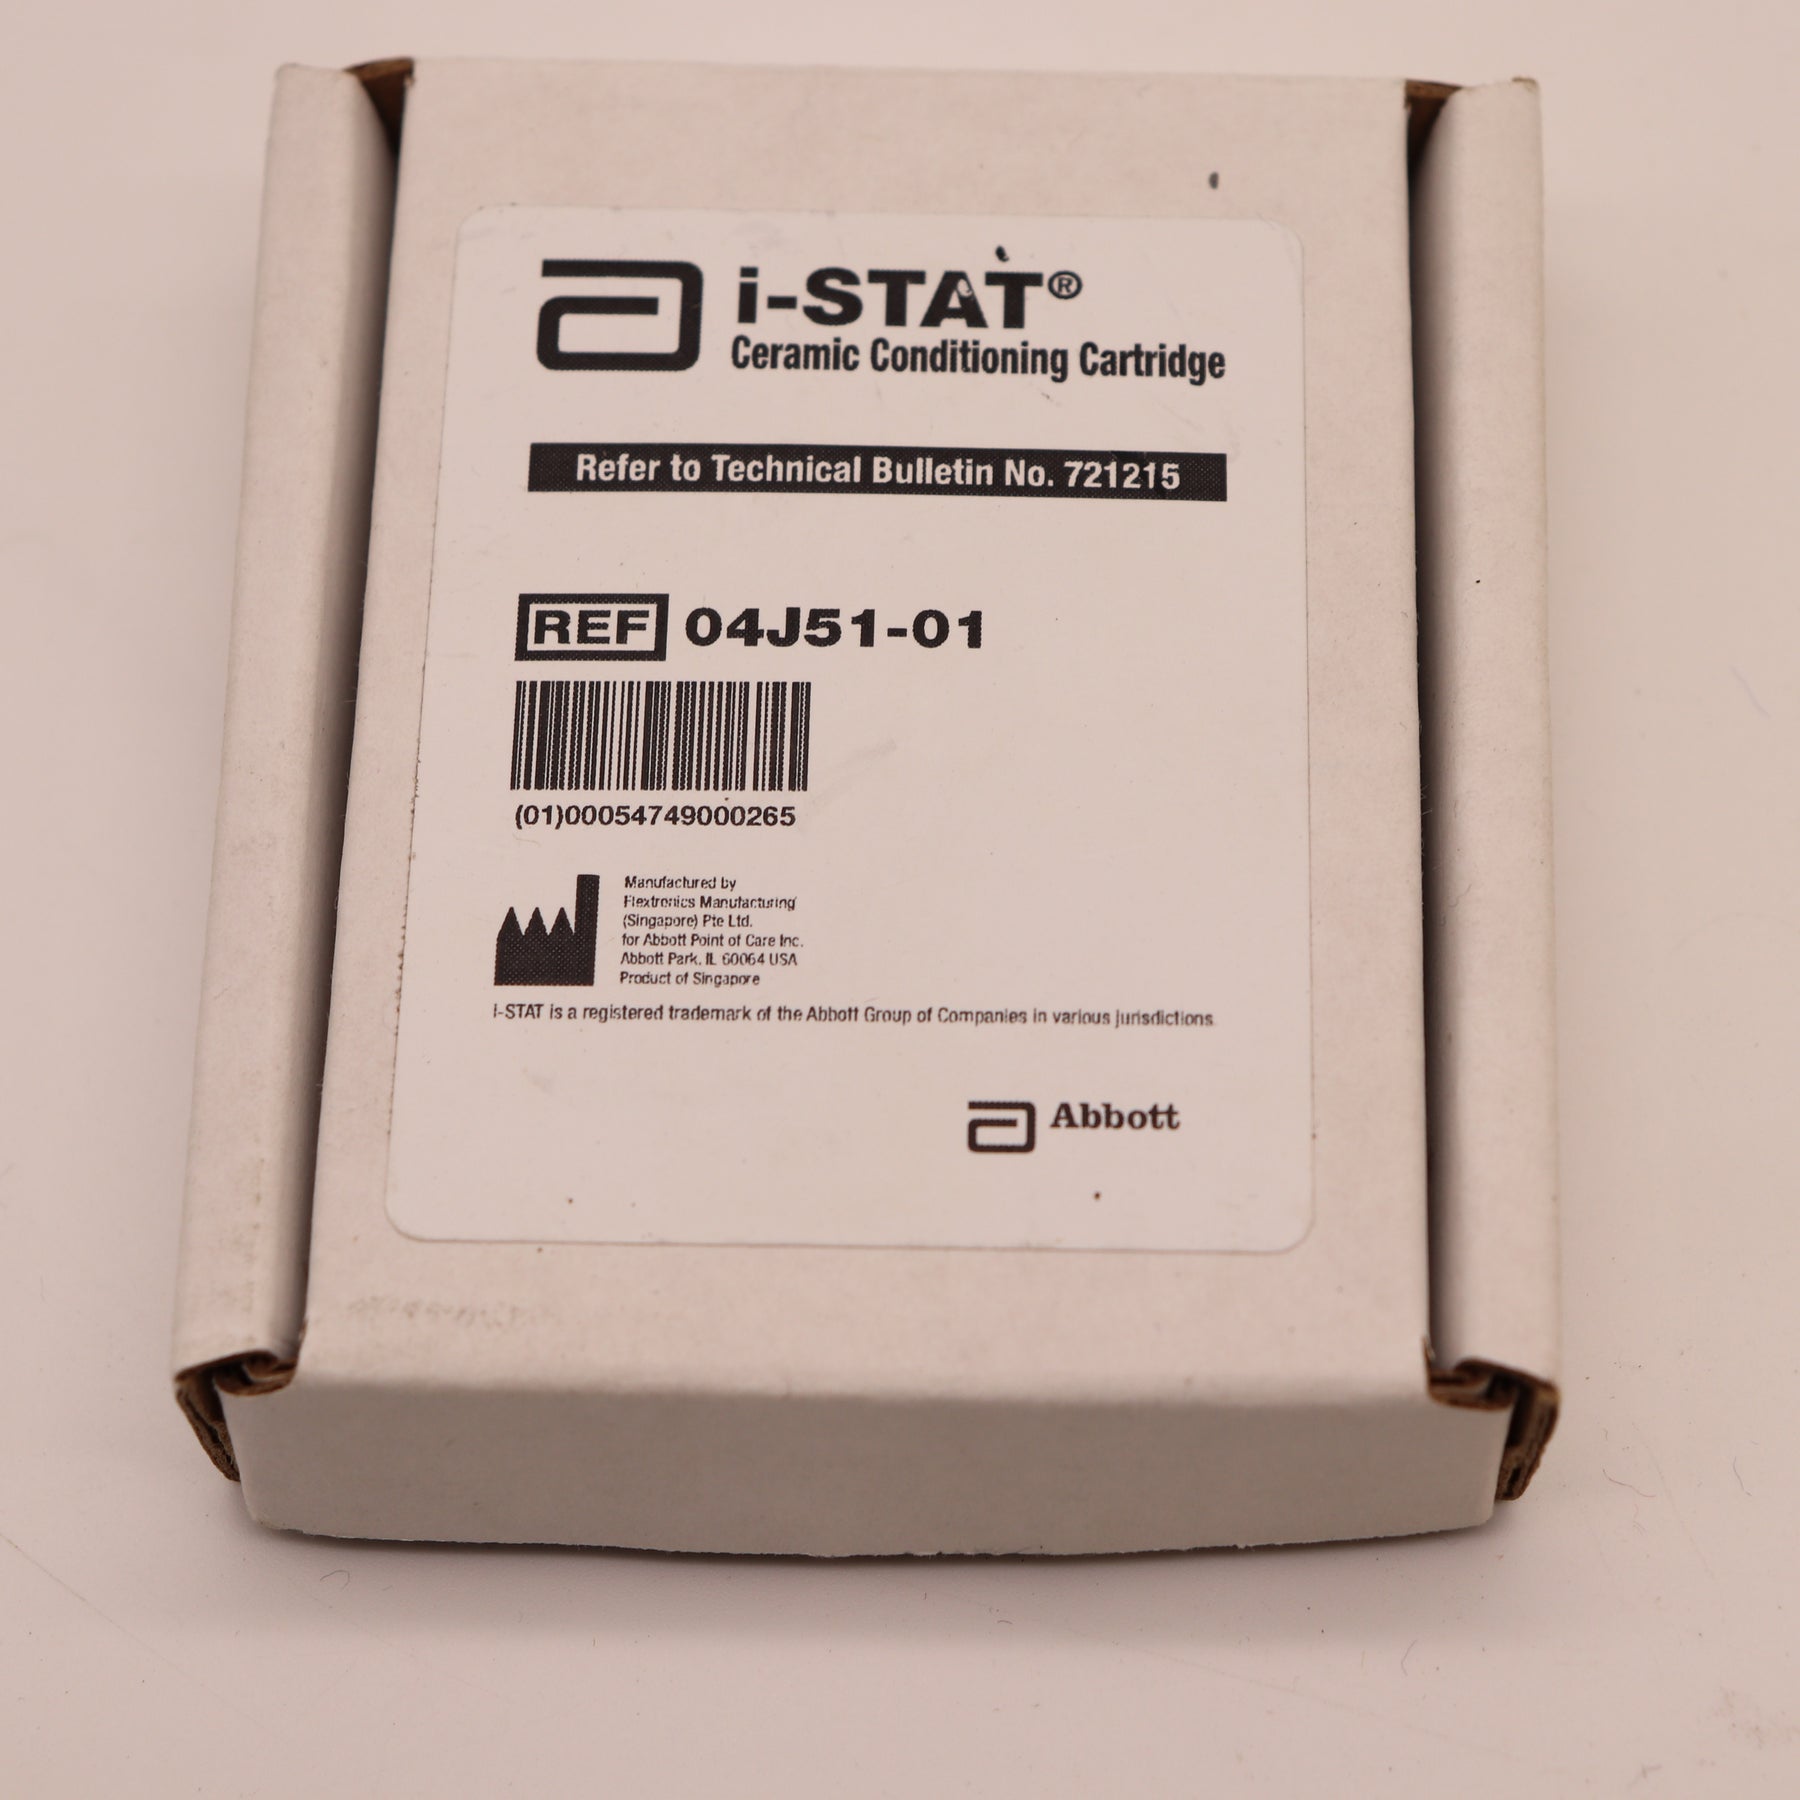 Abbott i-STAT Cearmaic Conditioning Cartridge REF 04J51-01